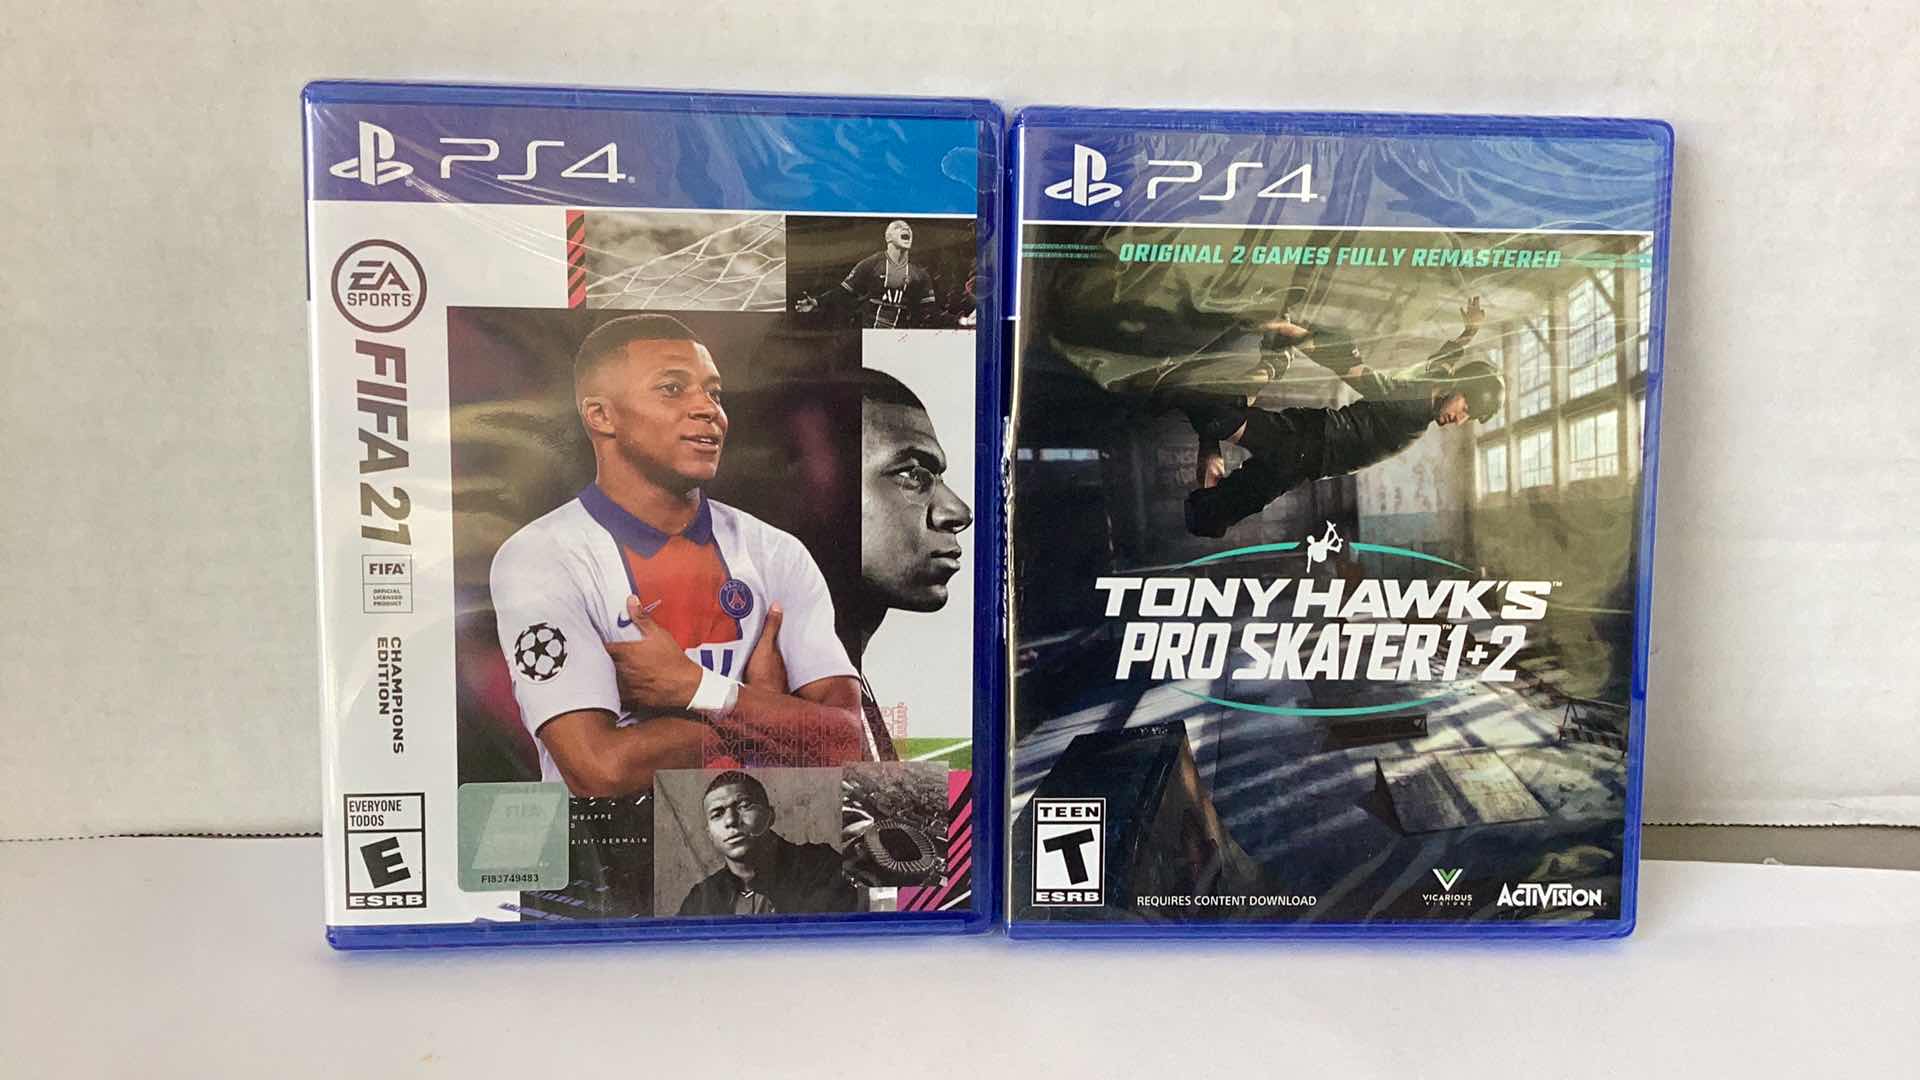 Photo 1 of 2 NEW PS4 GAMES: FIFA 21 AND TONY HAWK'S PRO SKATER 1+2